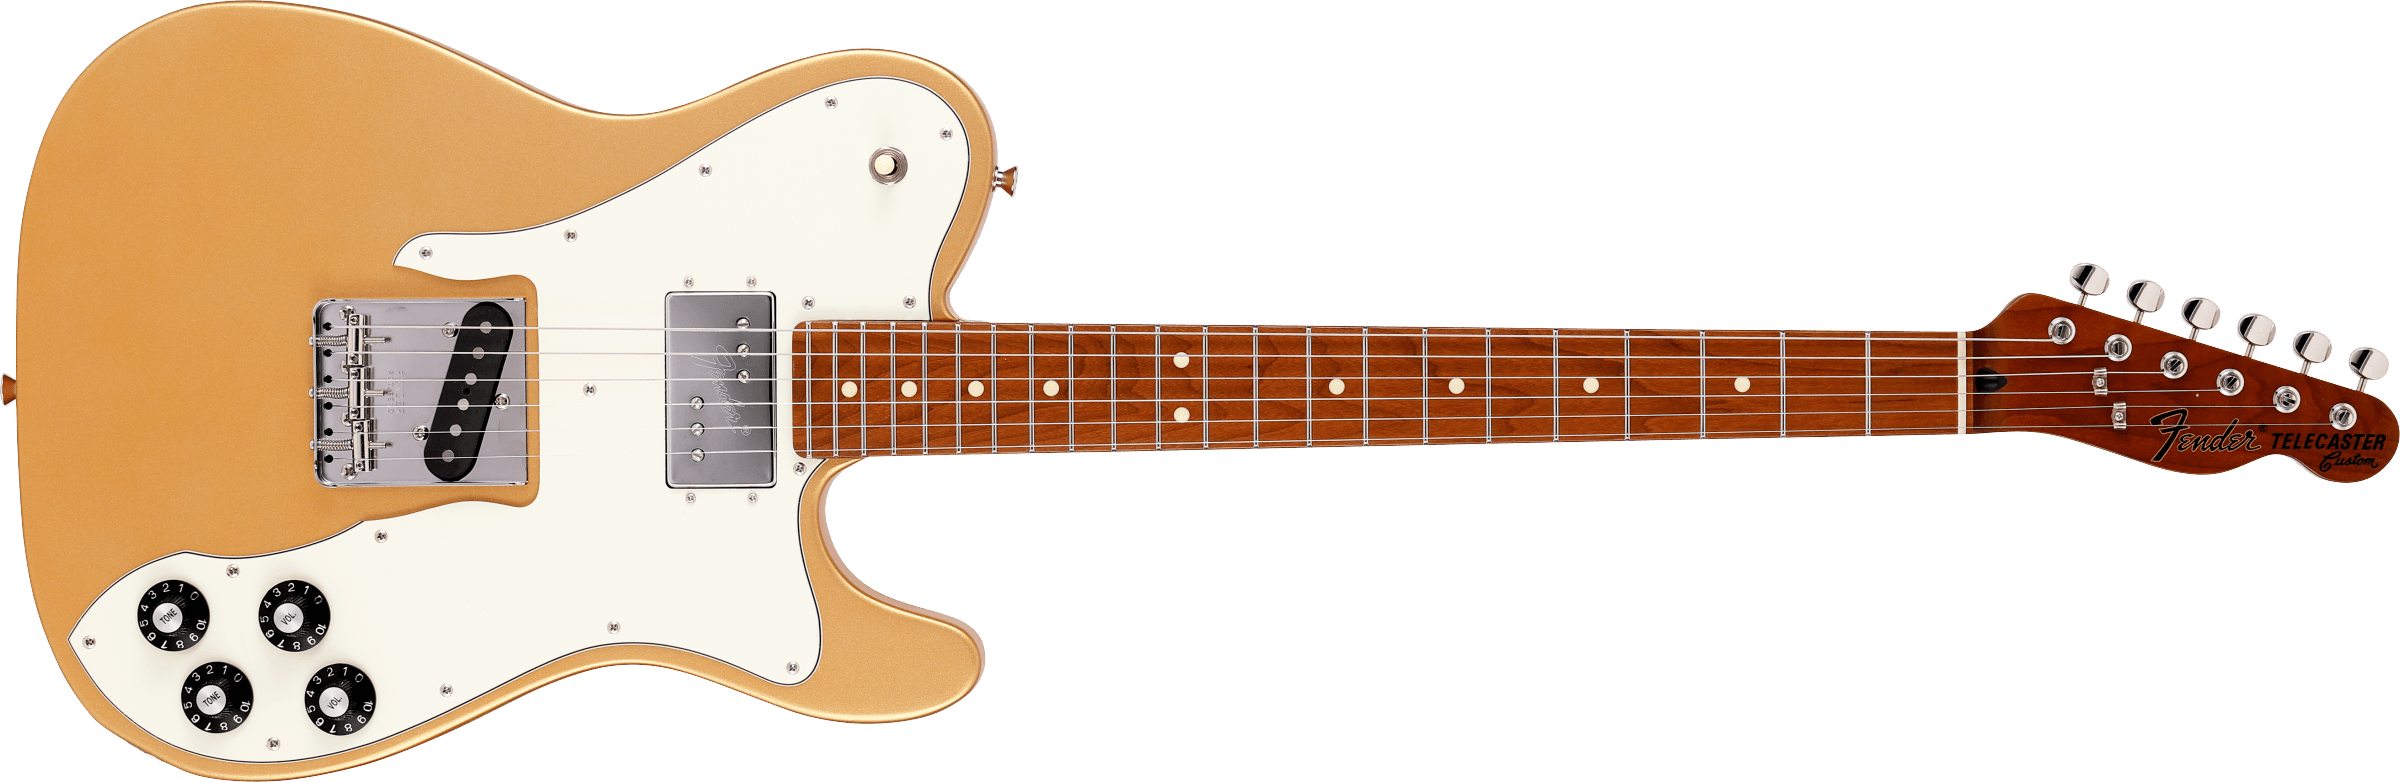 Fender Made in Japan Telecaster Custom Limited Run, Roasted Maple, Gold - Regent Sounds